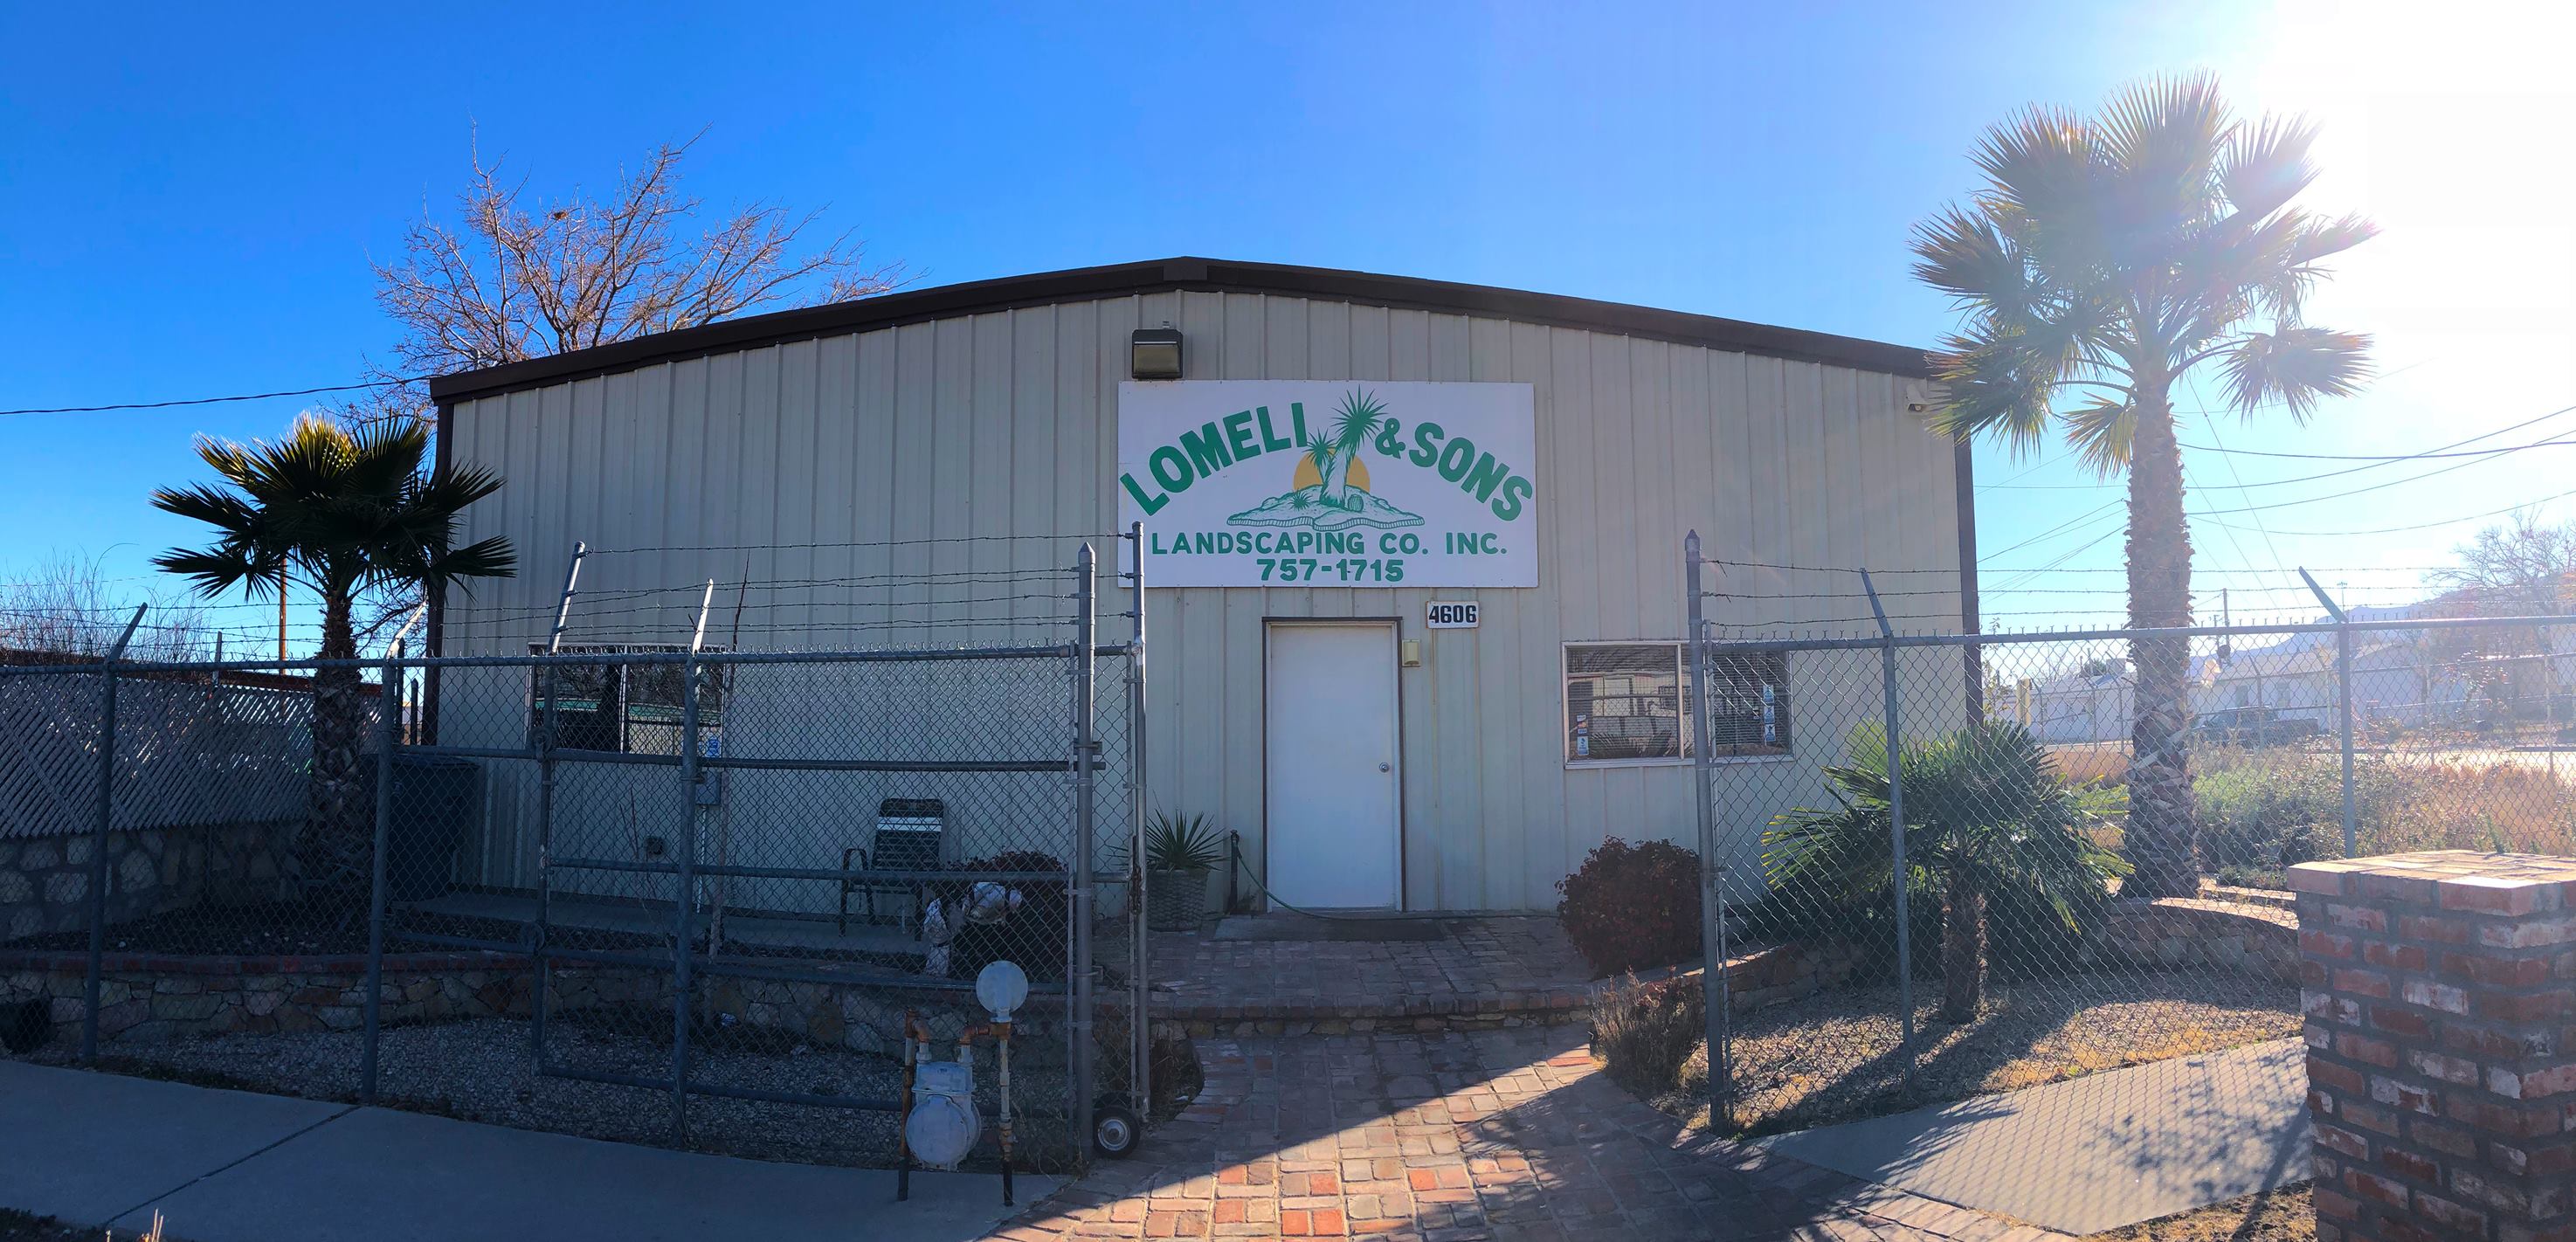 Lomeli & Sons Landscaping Co. Inc